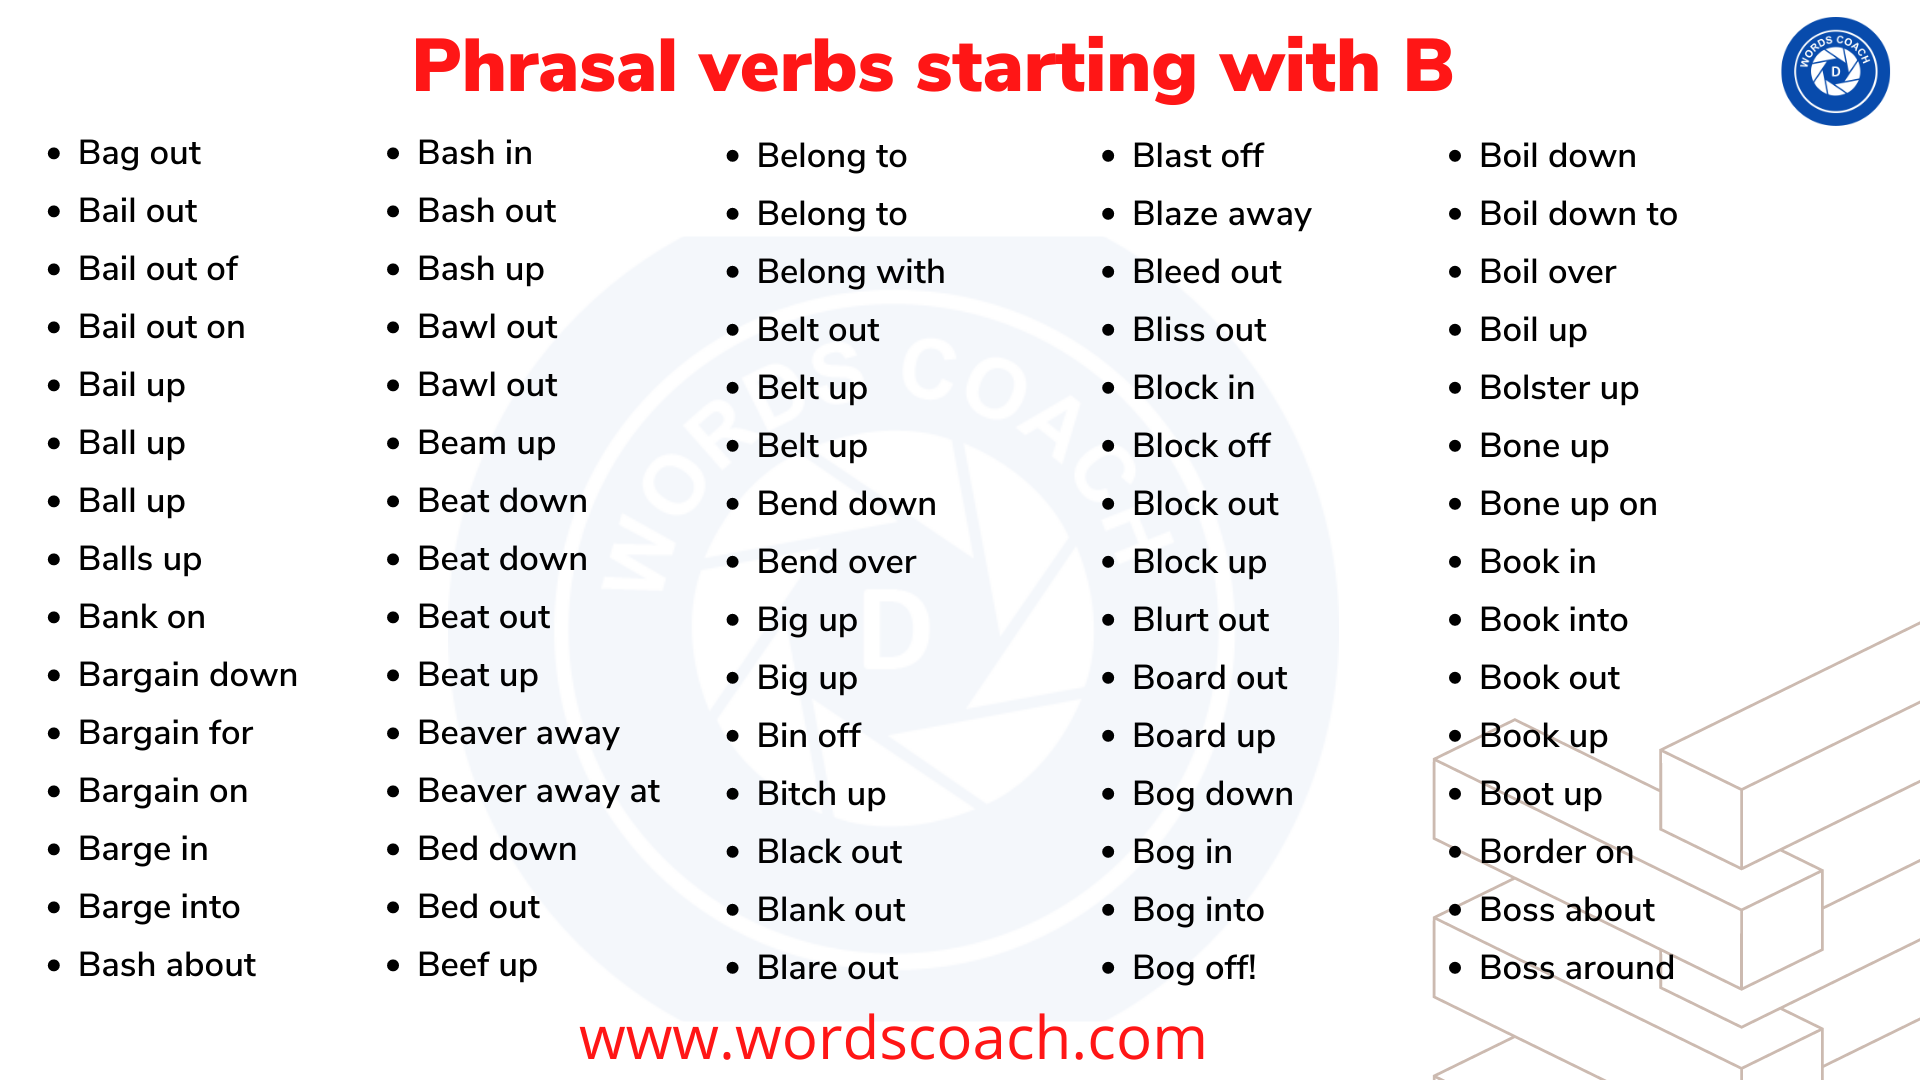 Phrasal verbs starting with B - wordscoach.com